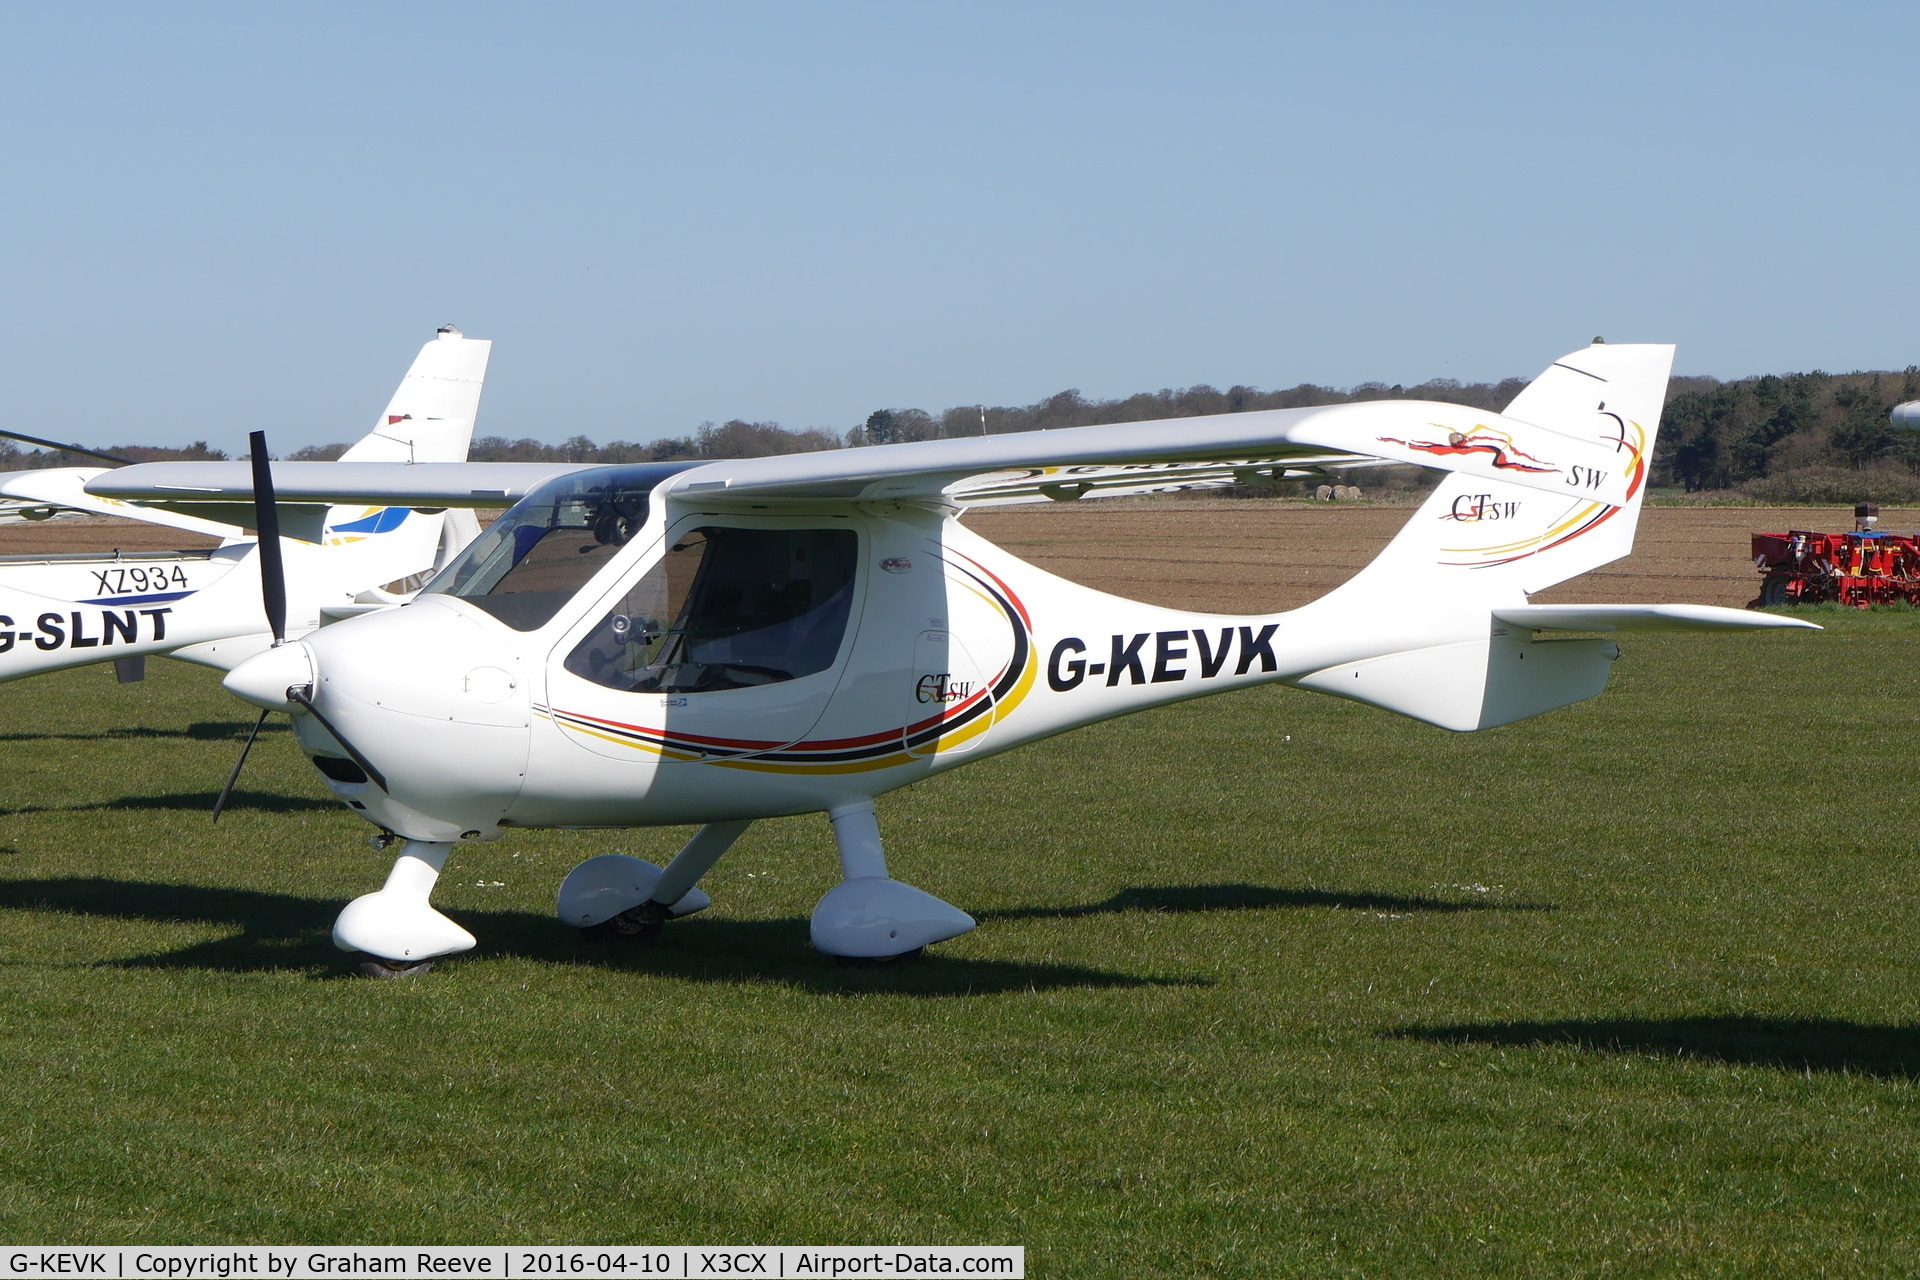 G-KEVK, 2009 Flight Design CTSW C/N 8483, Parked at Northrepps.